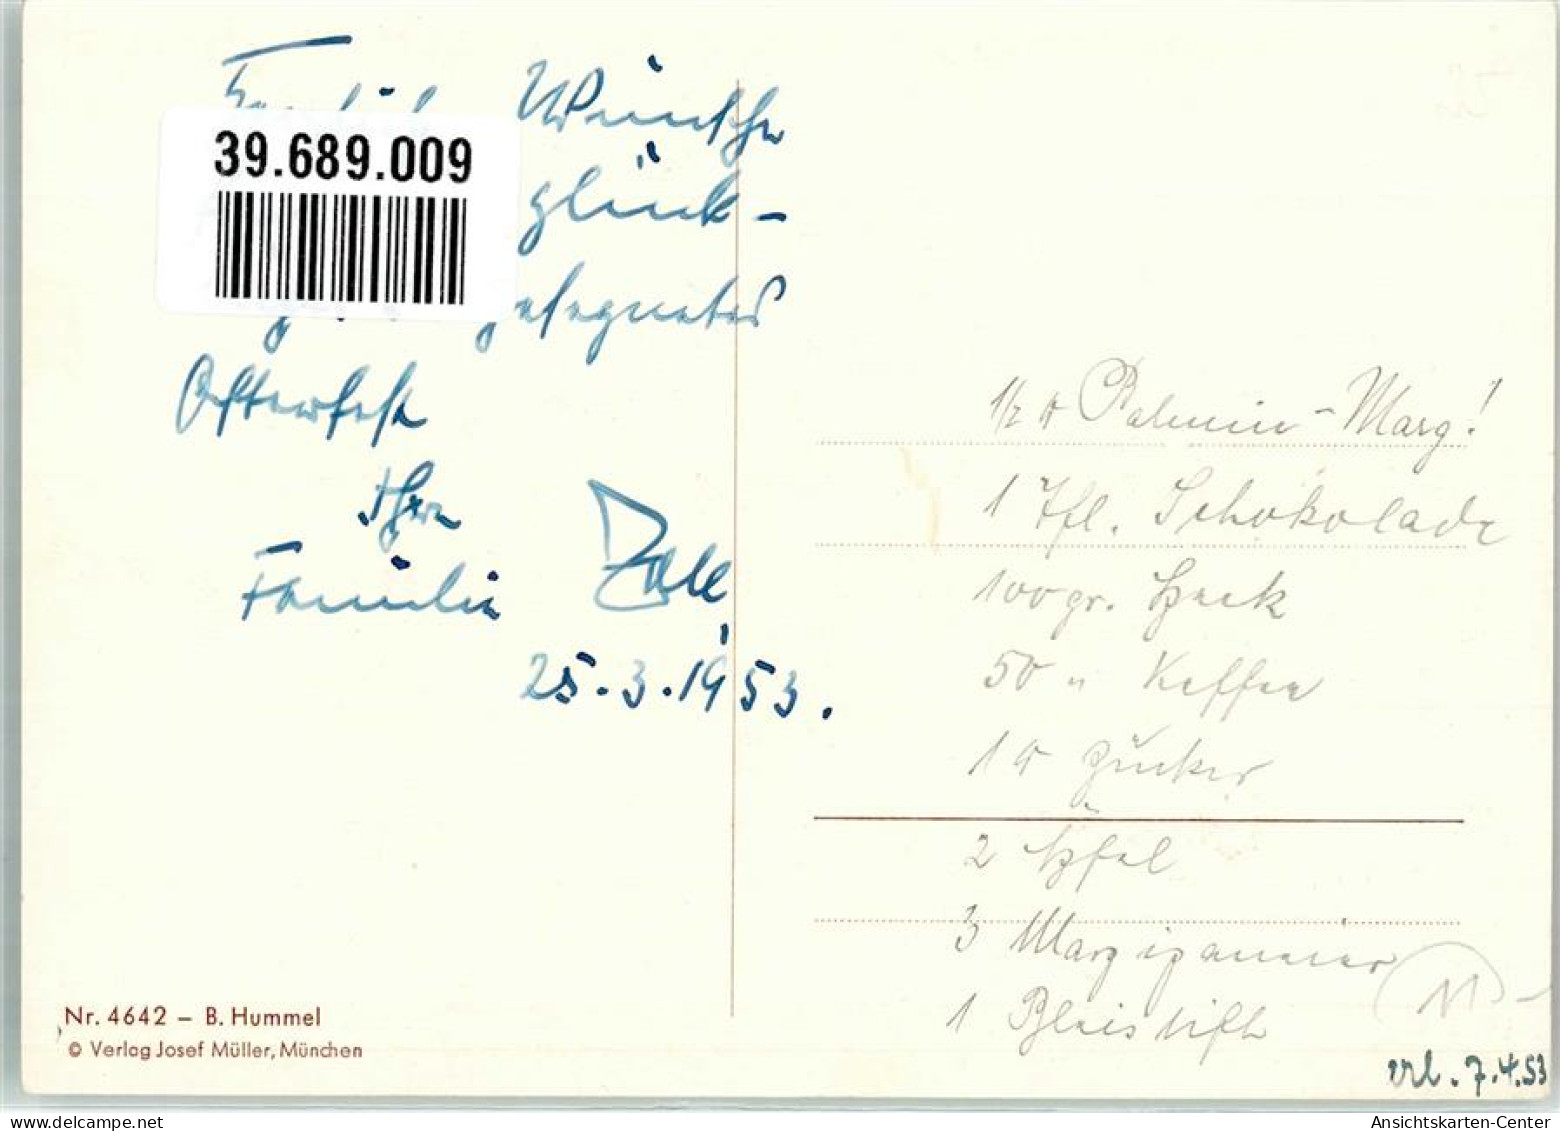 39689009 - Kind  Kueken Korb Mit Eier Ostern Sign. Hummel Verlag Josef Mueller Nr. 4642 - Ostern